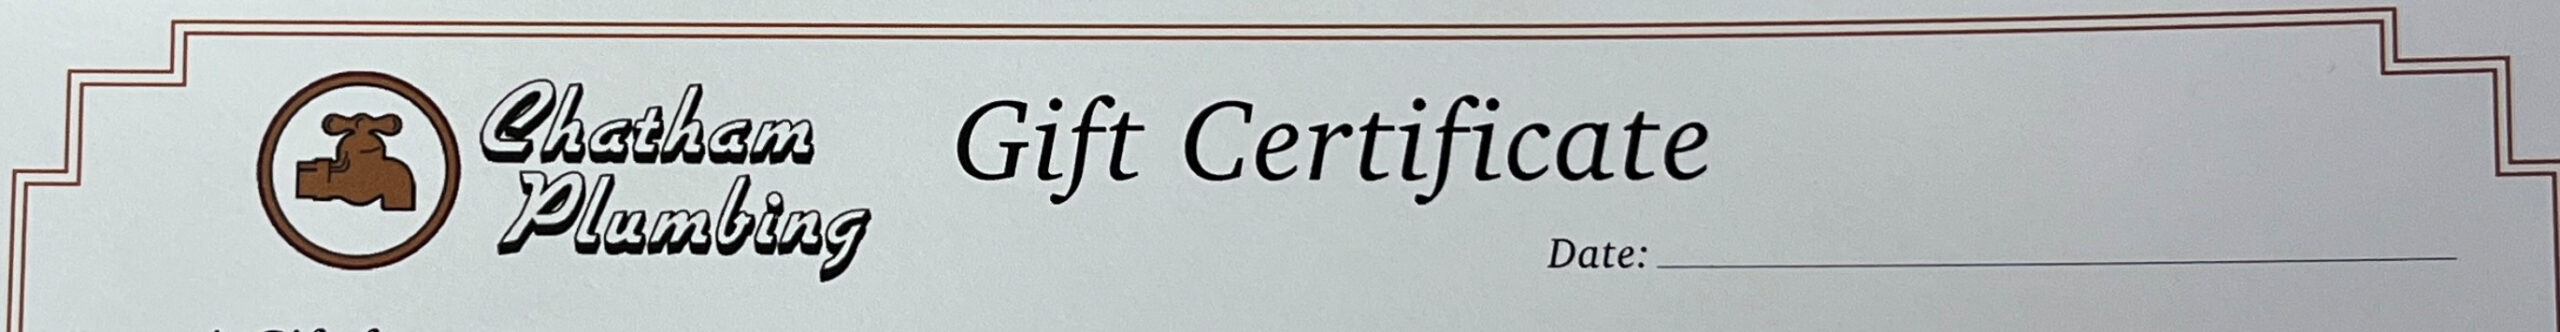 Gift Certificate Header